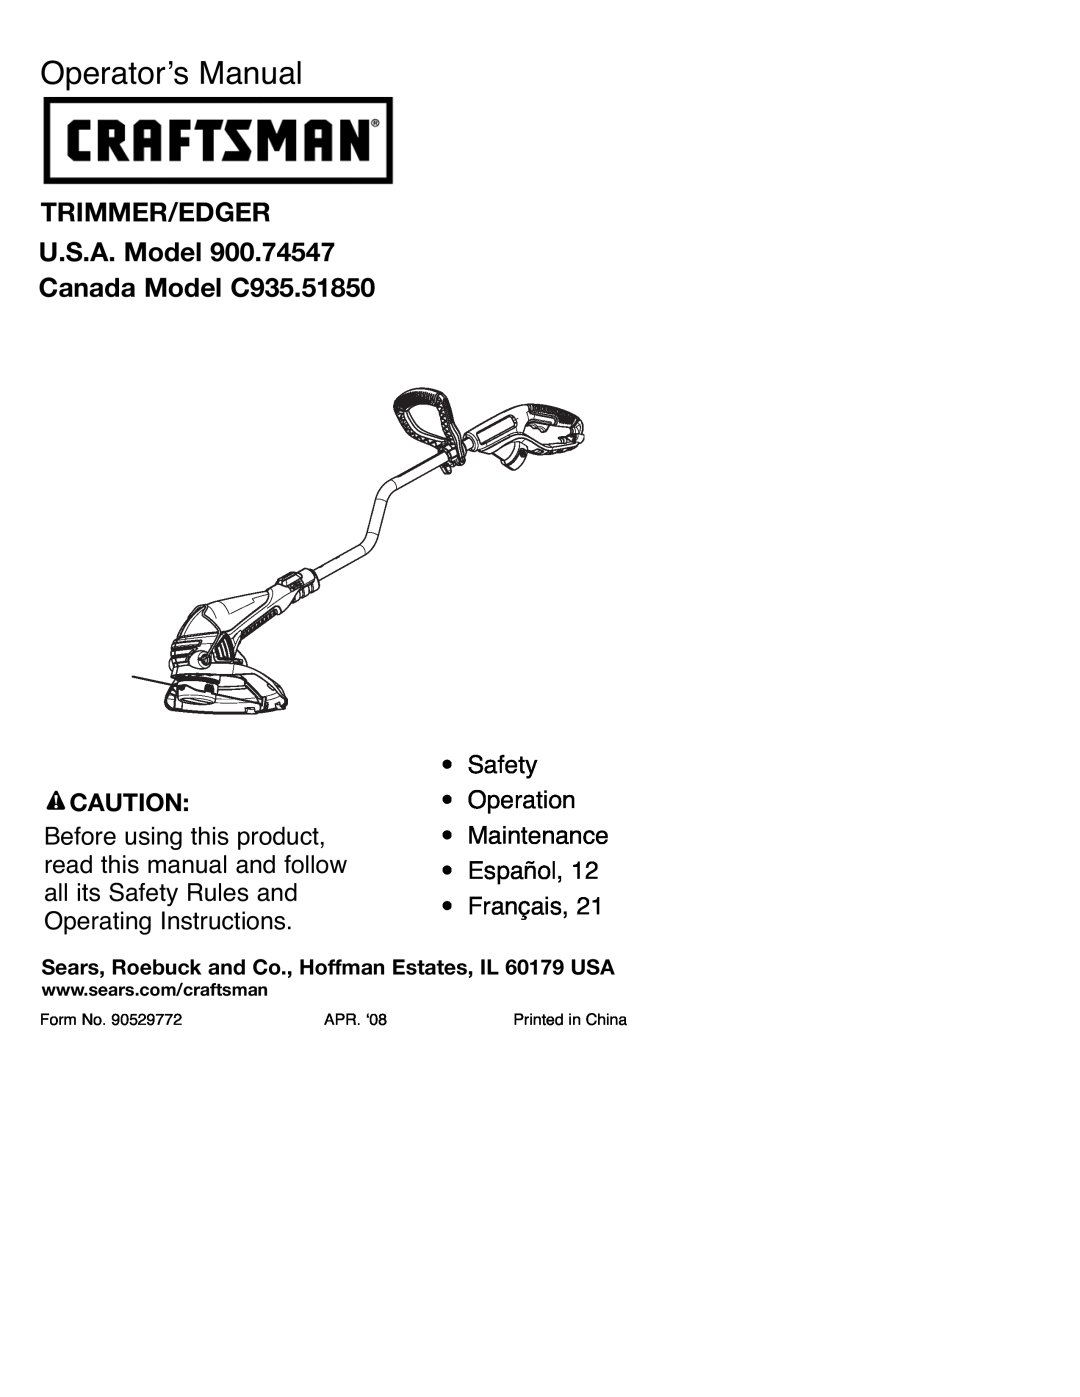 Craftsman manual Operator’s Manual, TRIMMER/EDGER U.S.A. Model 900.74547 Canada Model C935.51850 